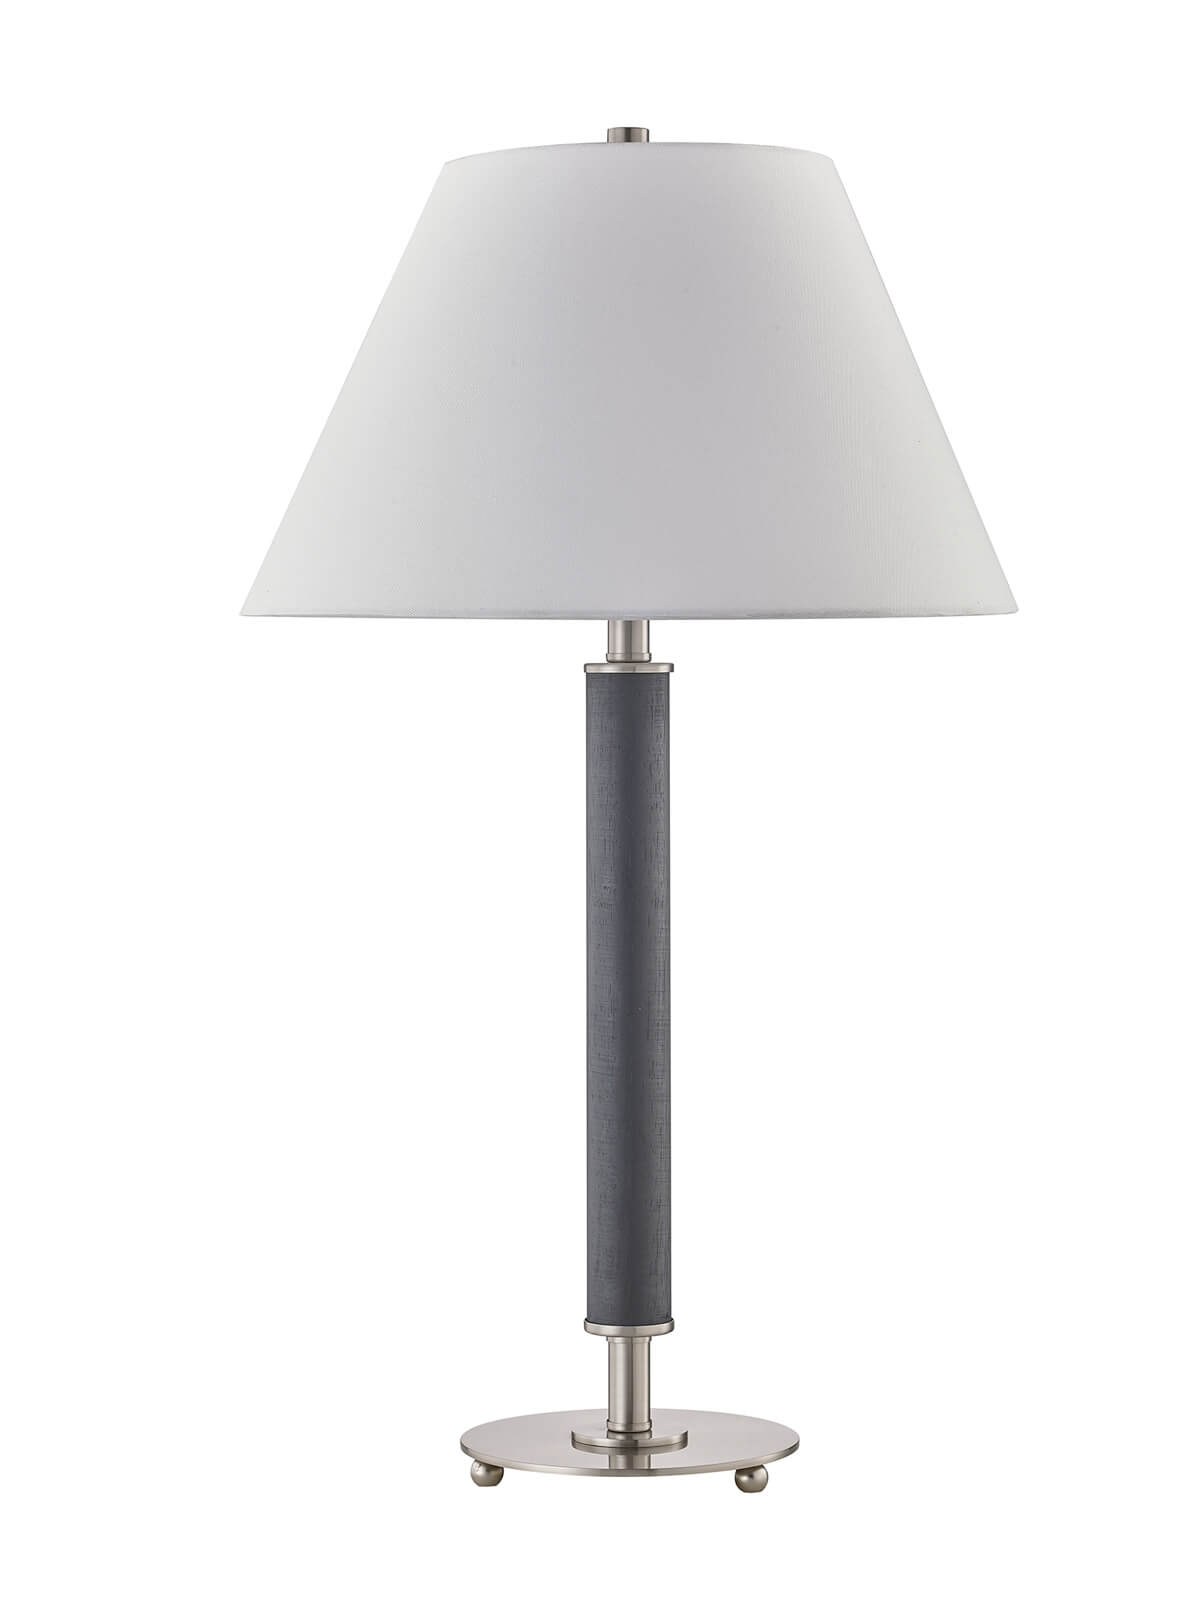 Karla Table Lamp